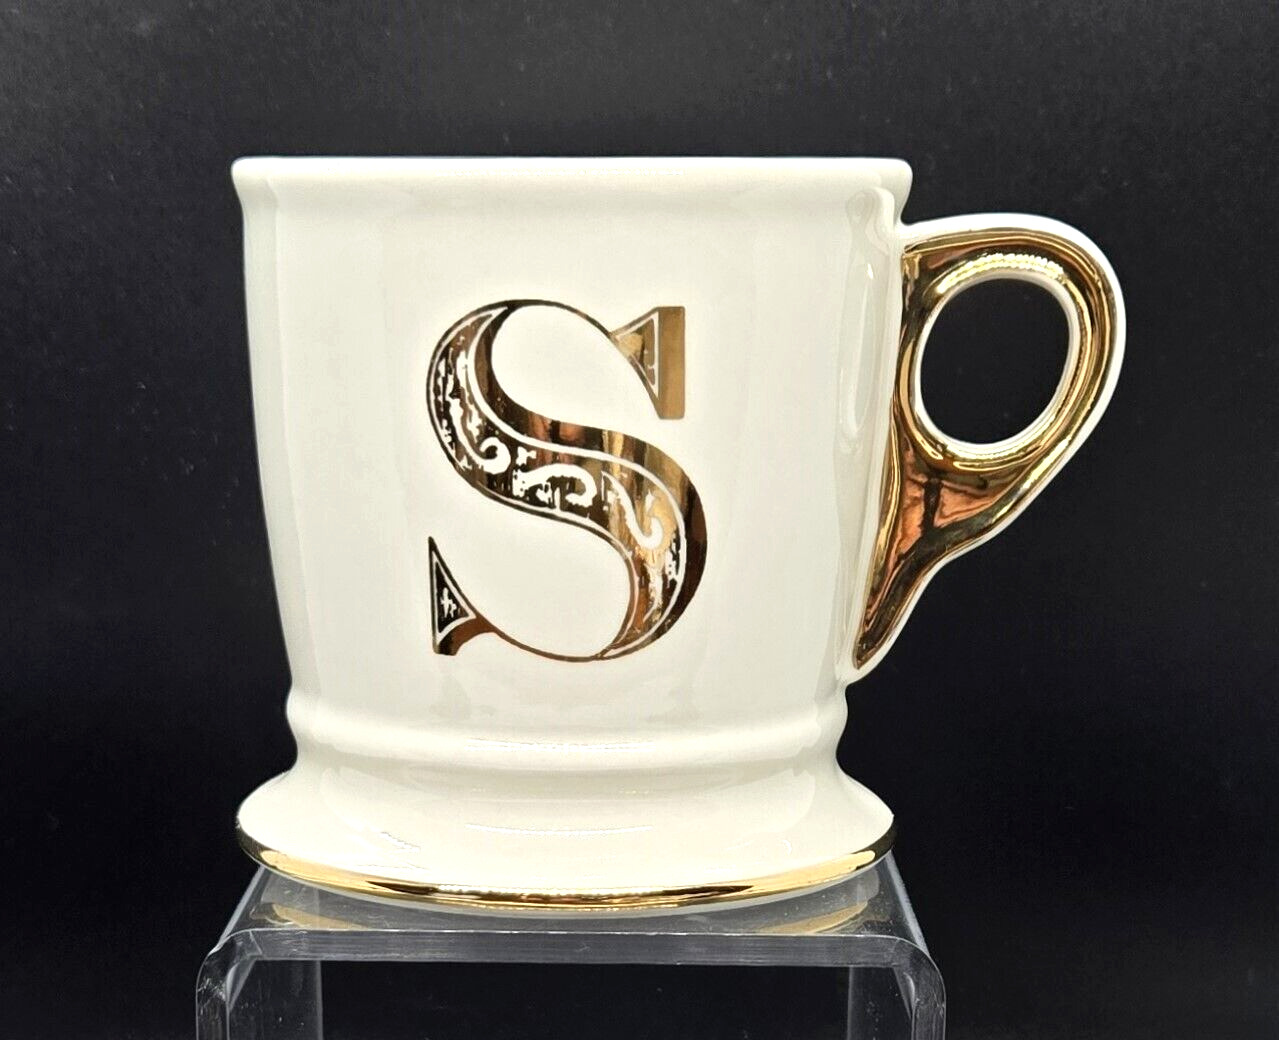 Anthropologie Shaving Mug / Coffee Cup - Gold Monogram / Initial / Letter S